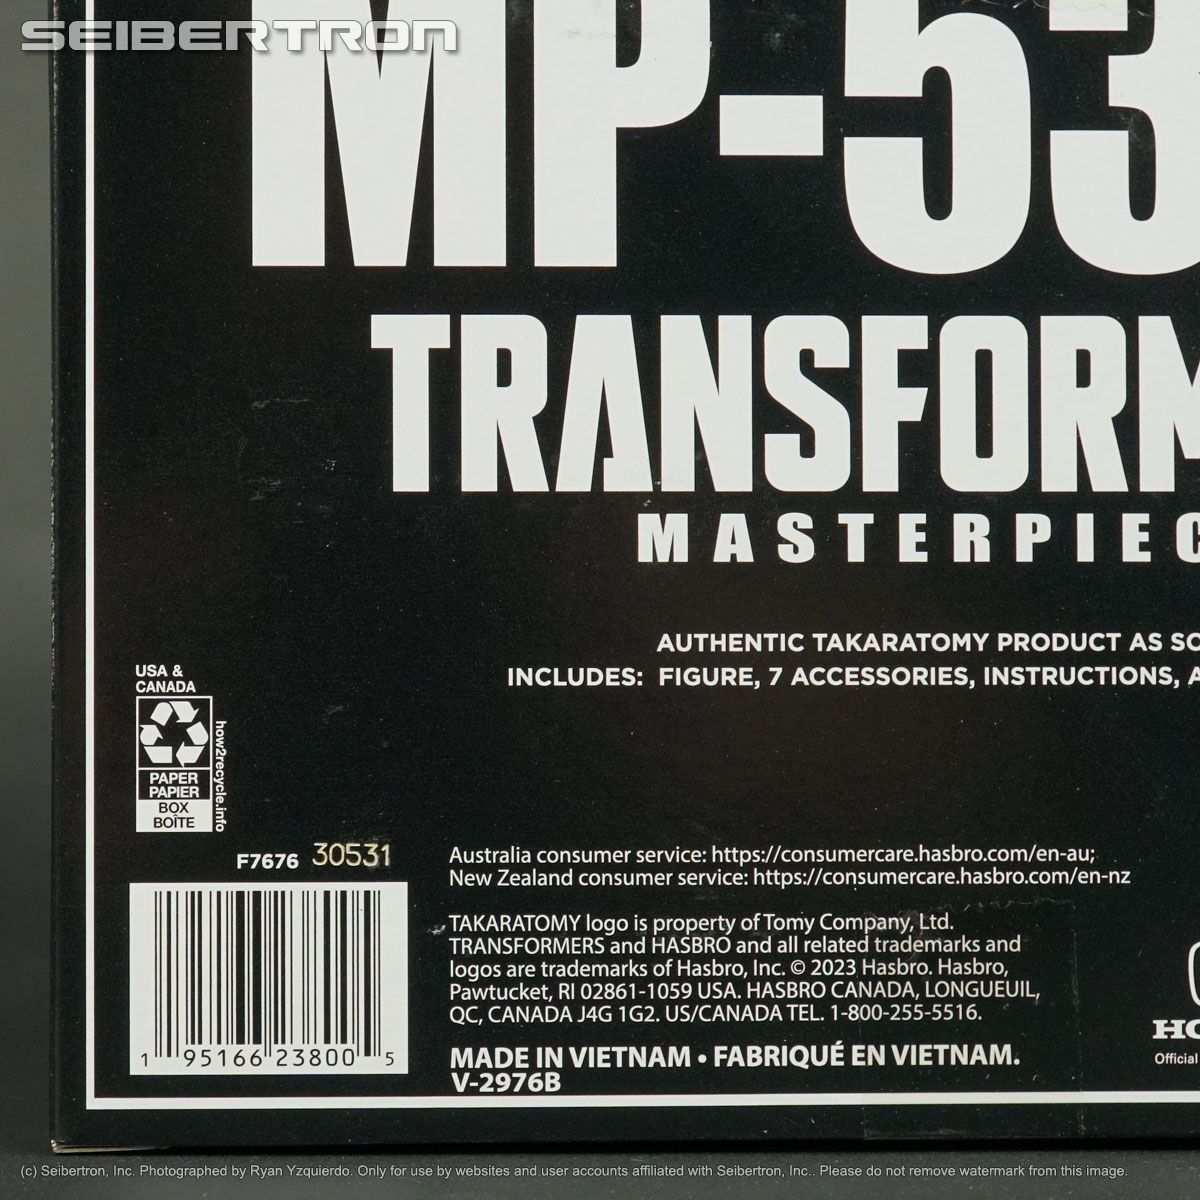 MP-53+B DIABURNOUT Transformers Masterpiece G1 Hasbro BURNOUT 2023 New